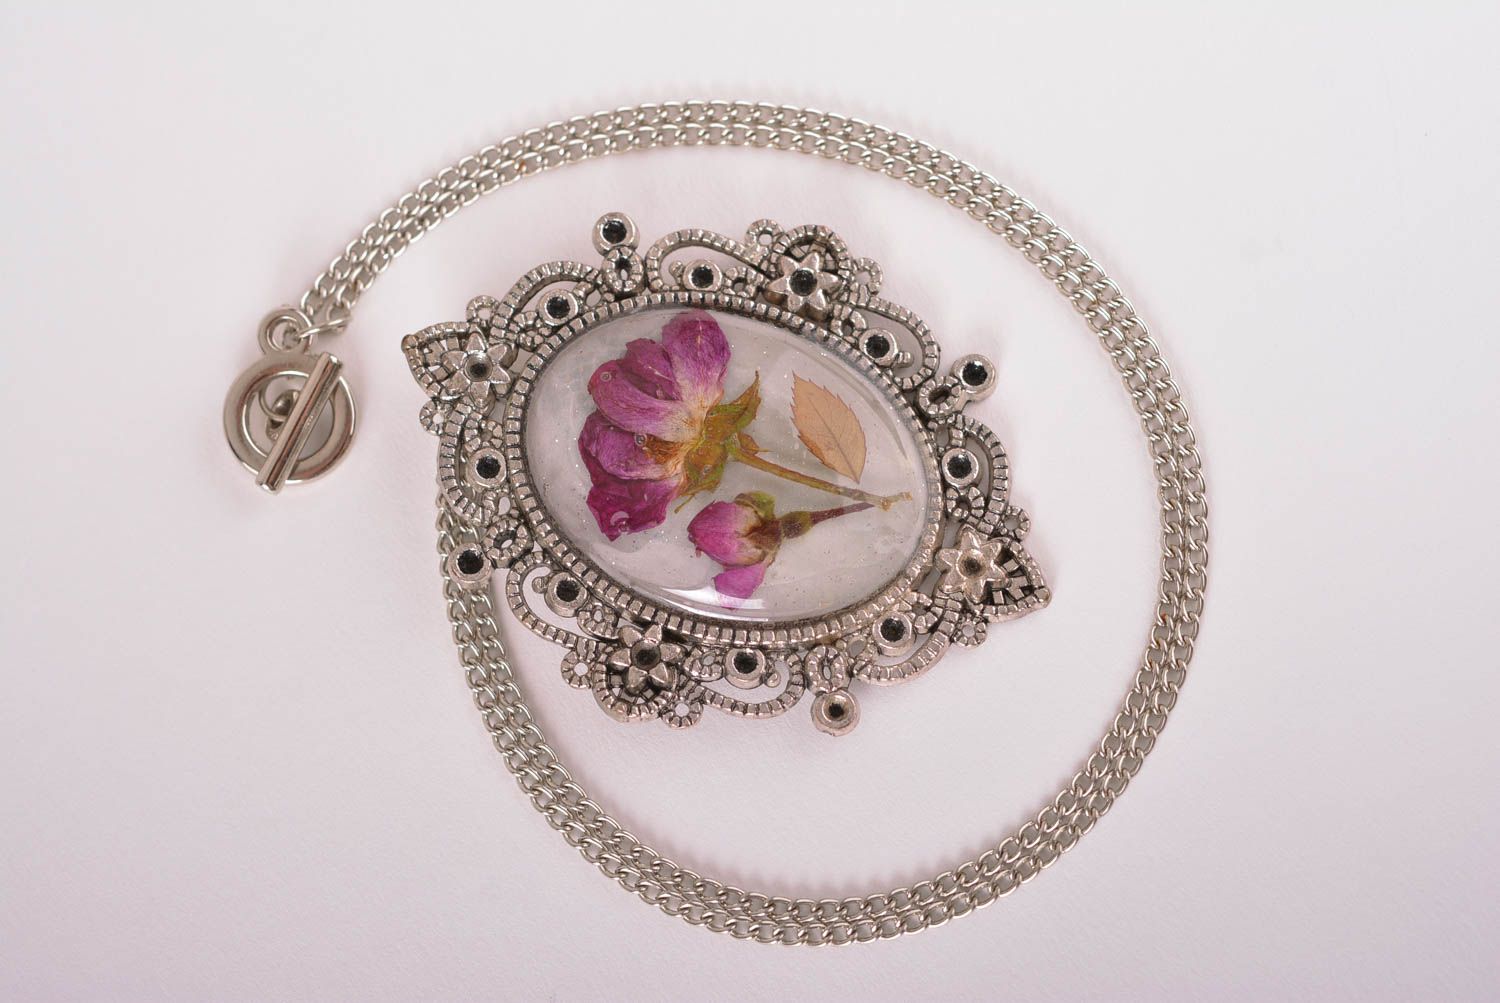 Handmade pendant unusual jewelry designer accessory gift ideas epoxy jewelry photo 2